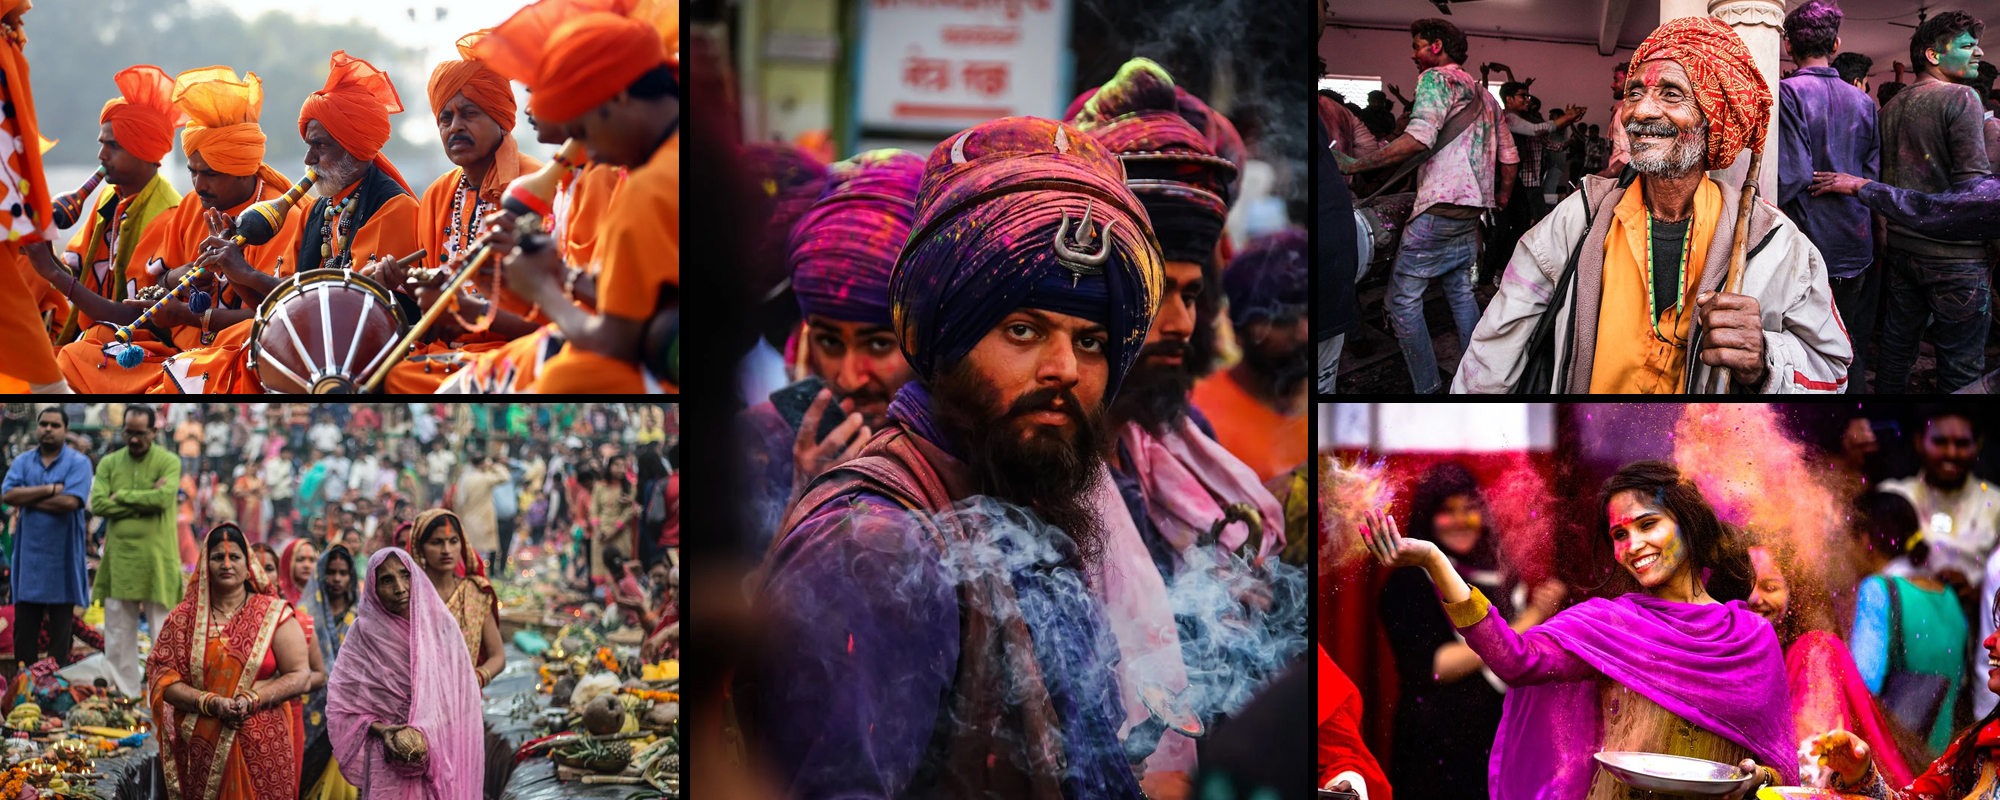 The Spiritual Significance of The Kumbh Mela Festival